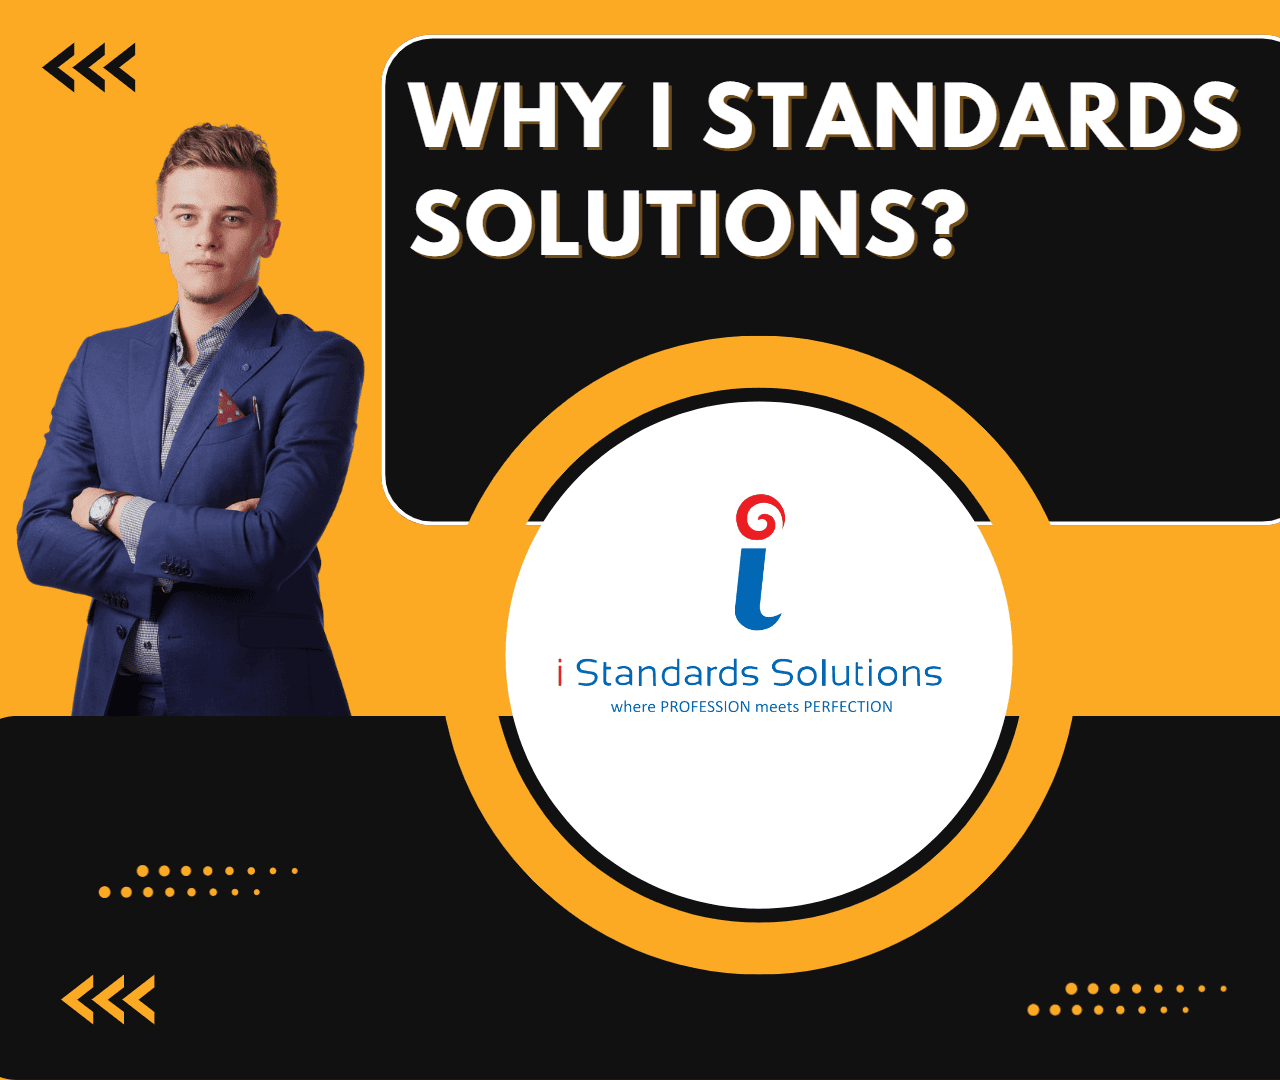 I Standards Solutions